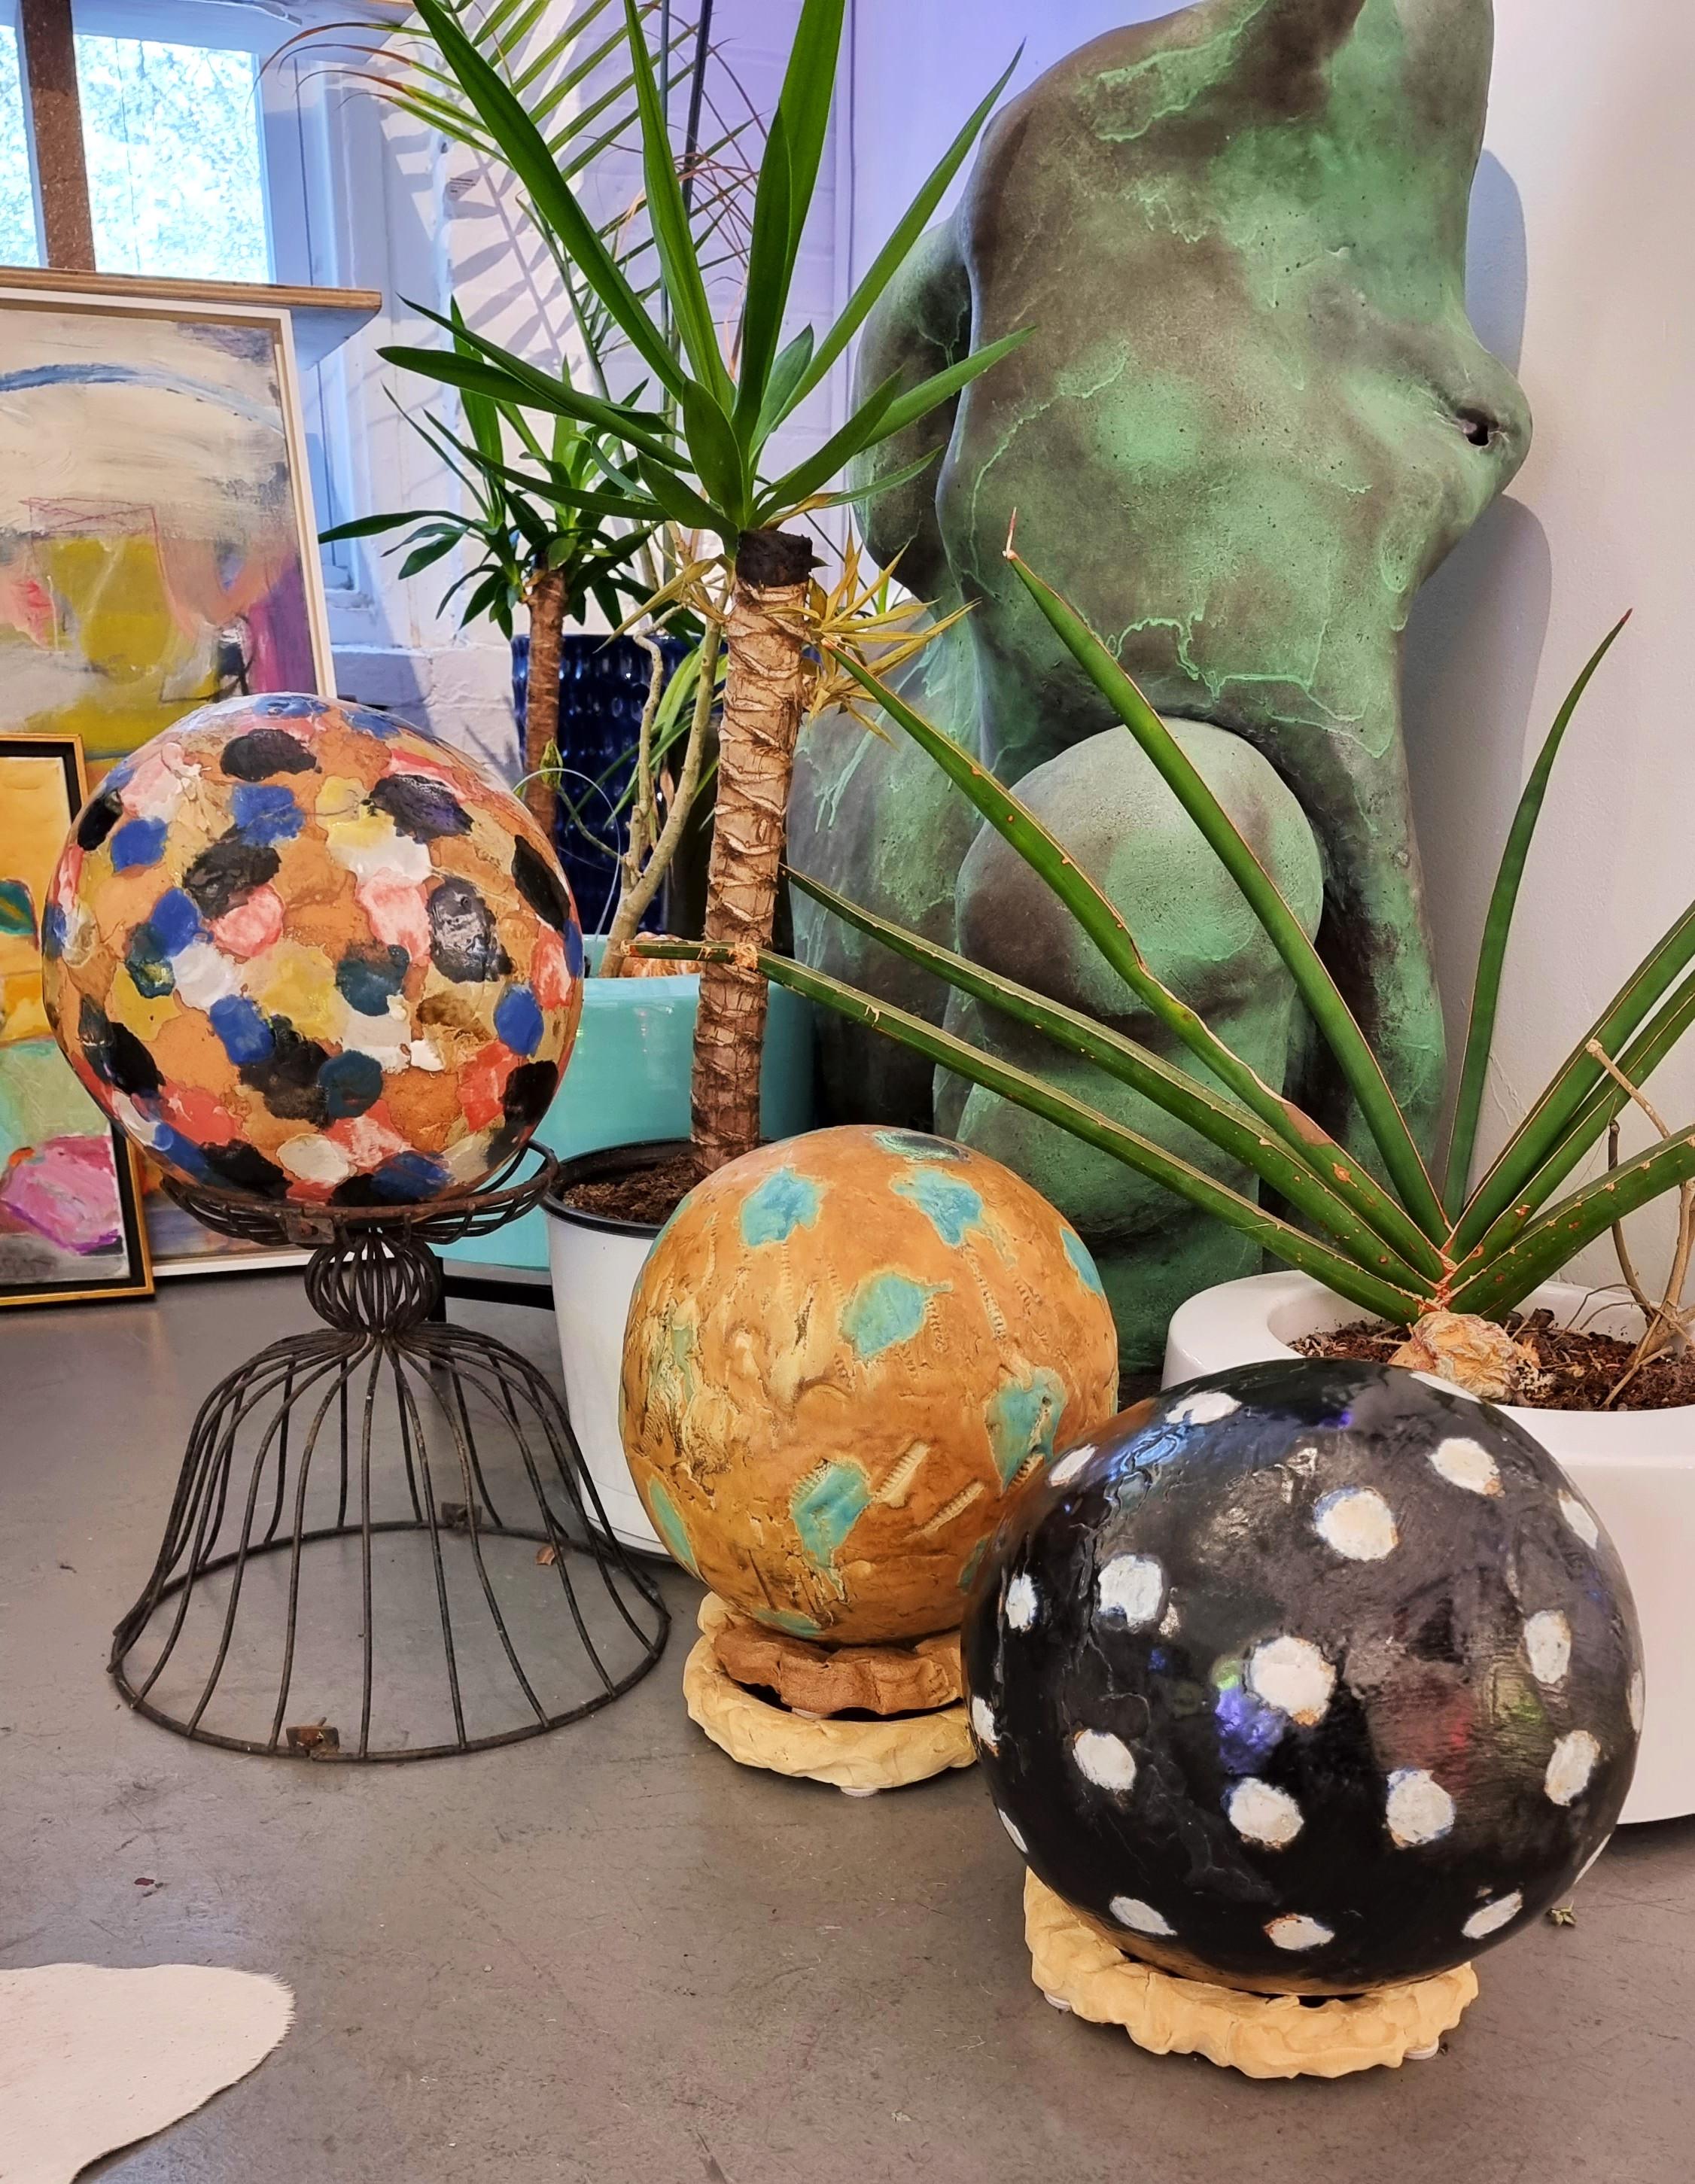 Carol Fleming
Untitled Sphere (multi-color)
Medium: Ceramic, glaze
Year: 2020
Size: 12